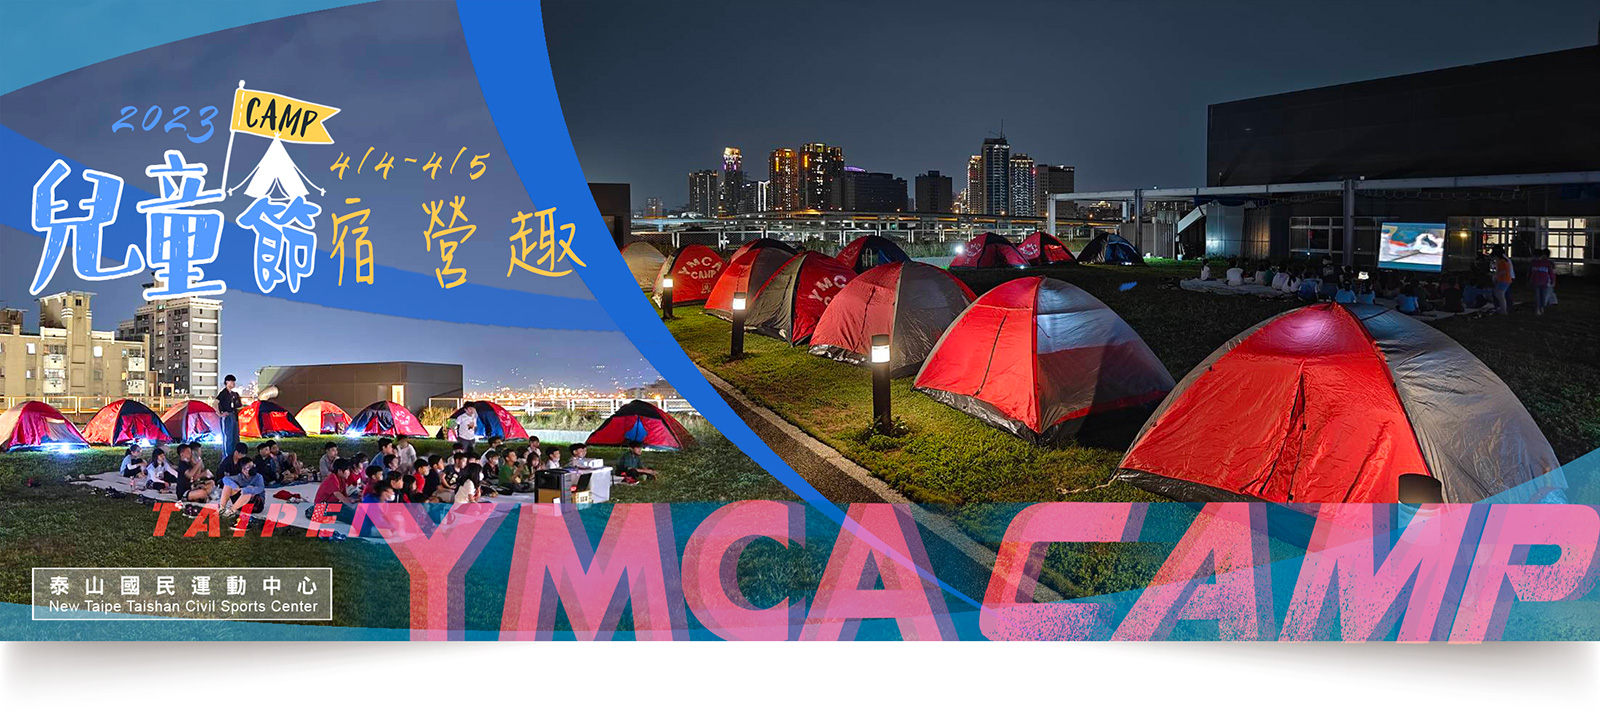 YMCA CAMP,campYMCA,YMCA露營,露營活動,TS YMCA,YMCAキャンプ,YMCAキャンプ,YMCA 캠핑,Taiwan YMCA CAMP,YMCA Day Camps,YMCA Camp Programs,兒童節宿營趣